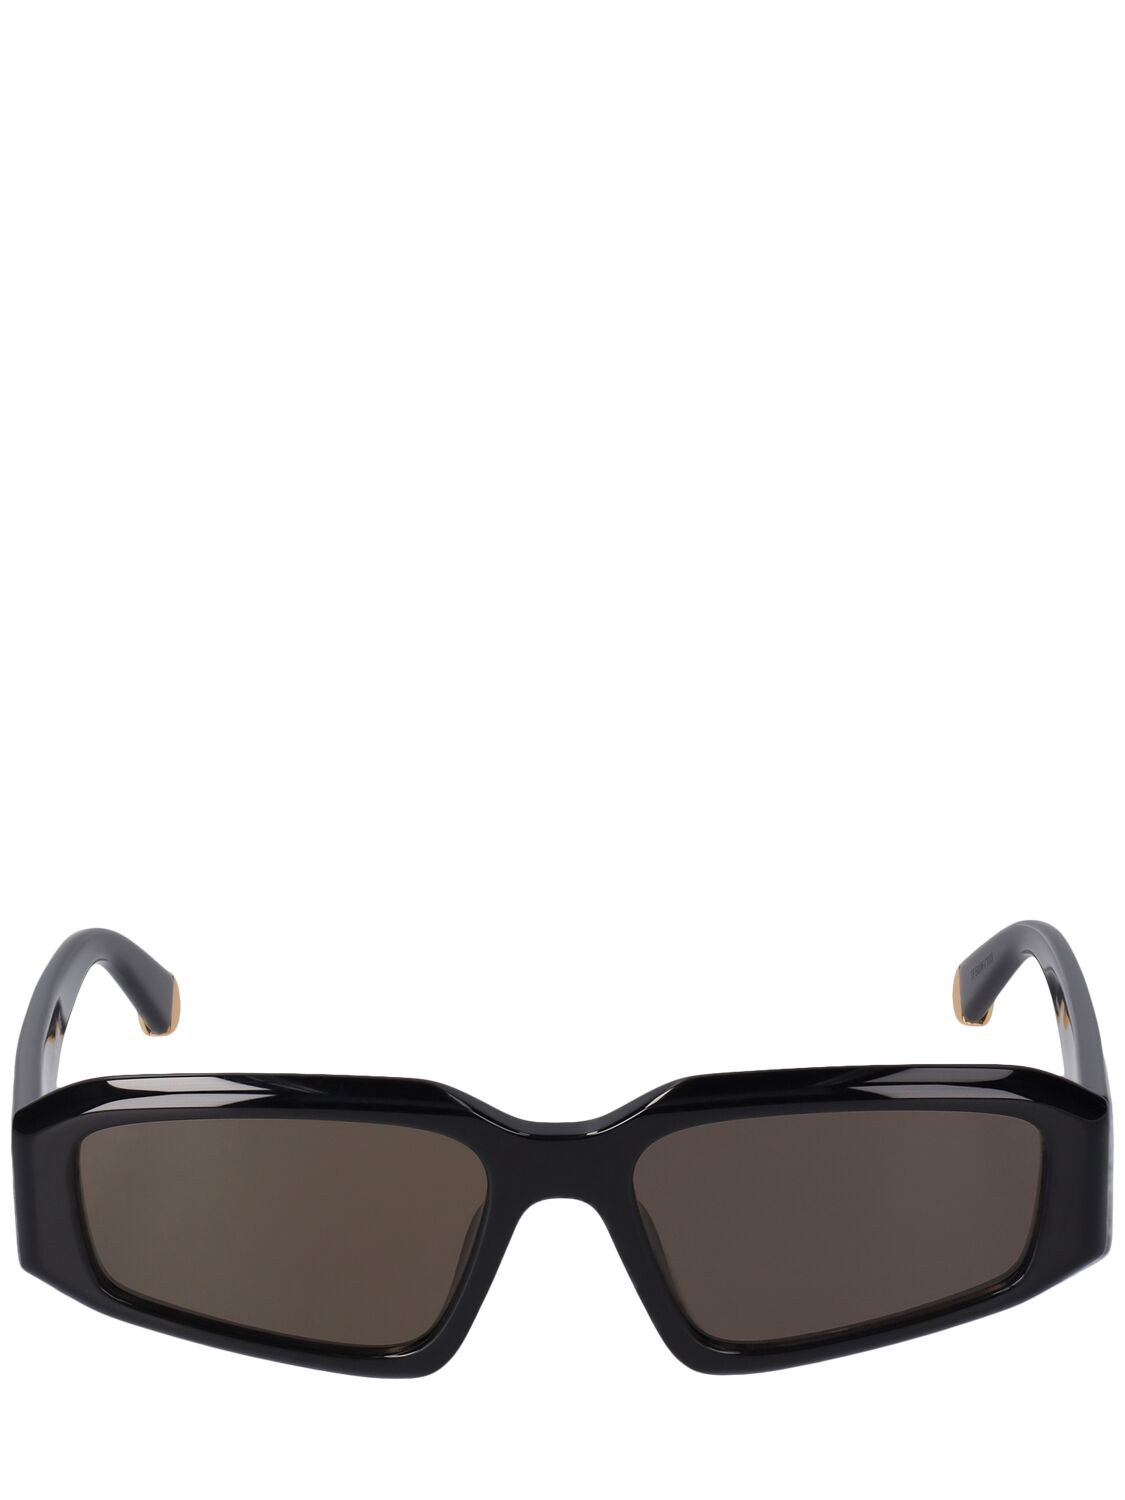 Stella Mccartney Squared Acetate Sunglasses In Black,brown